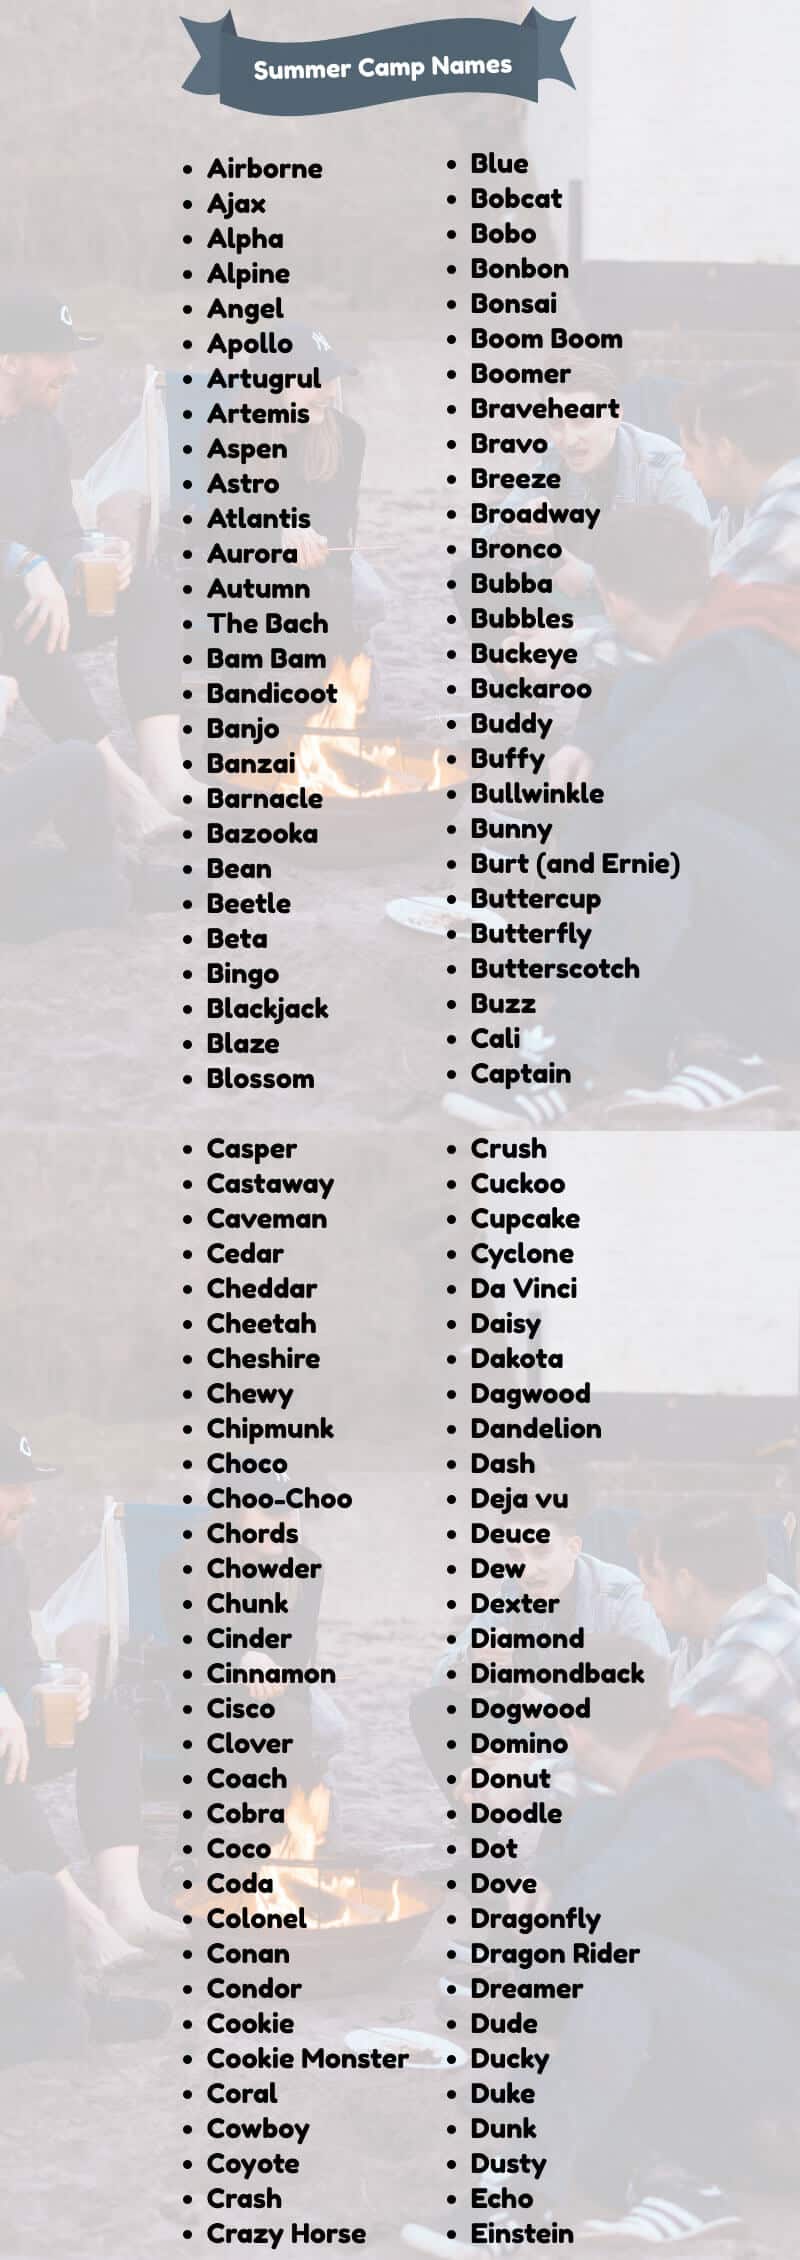 camp names list